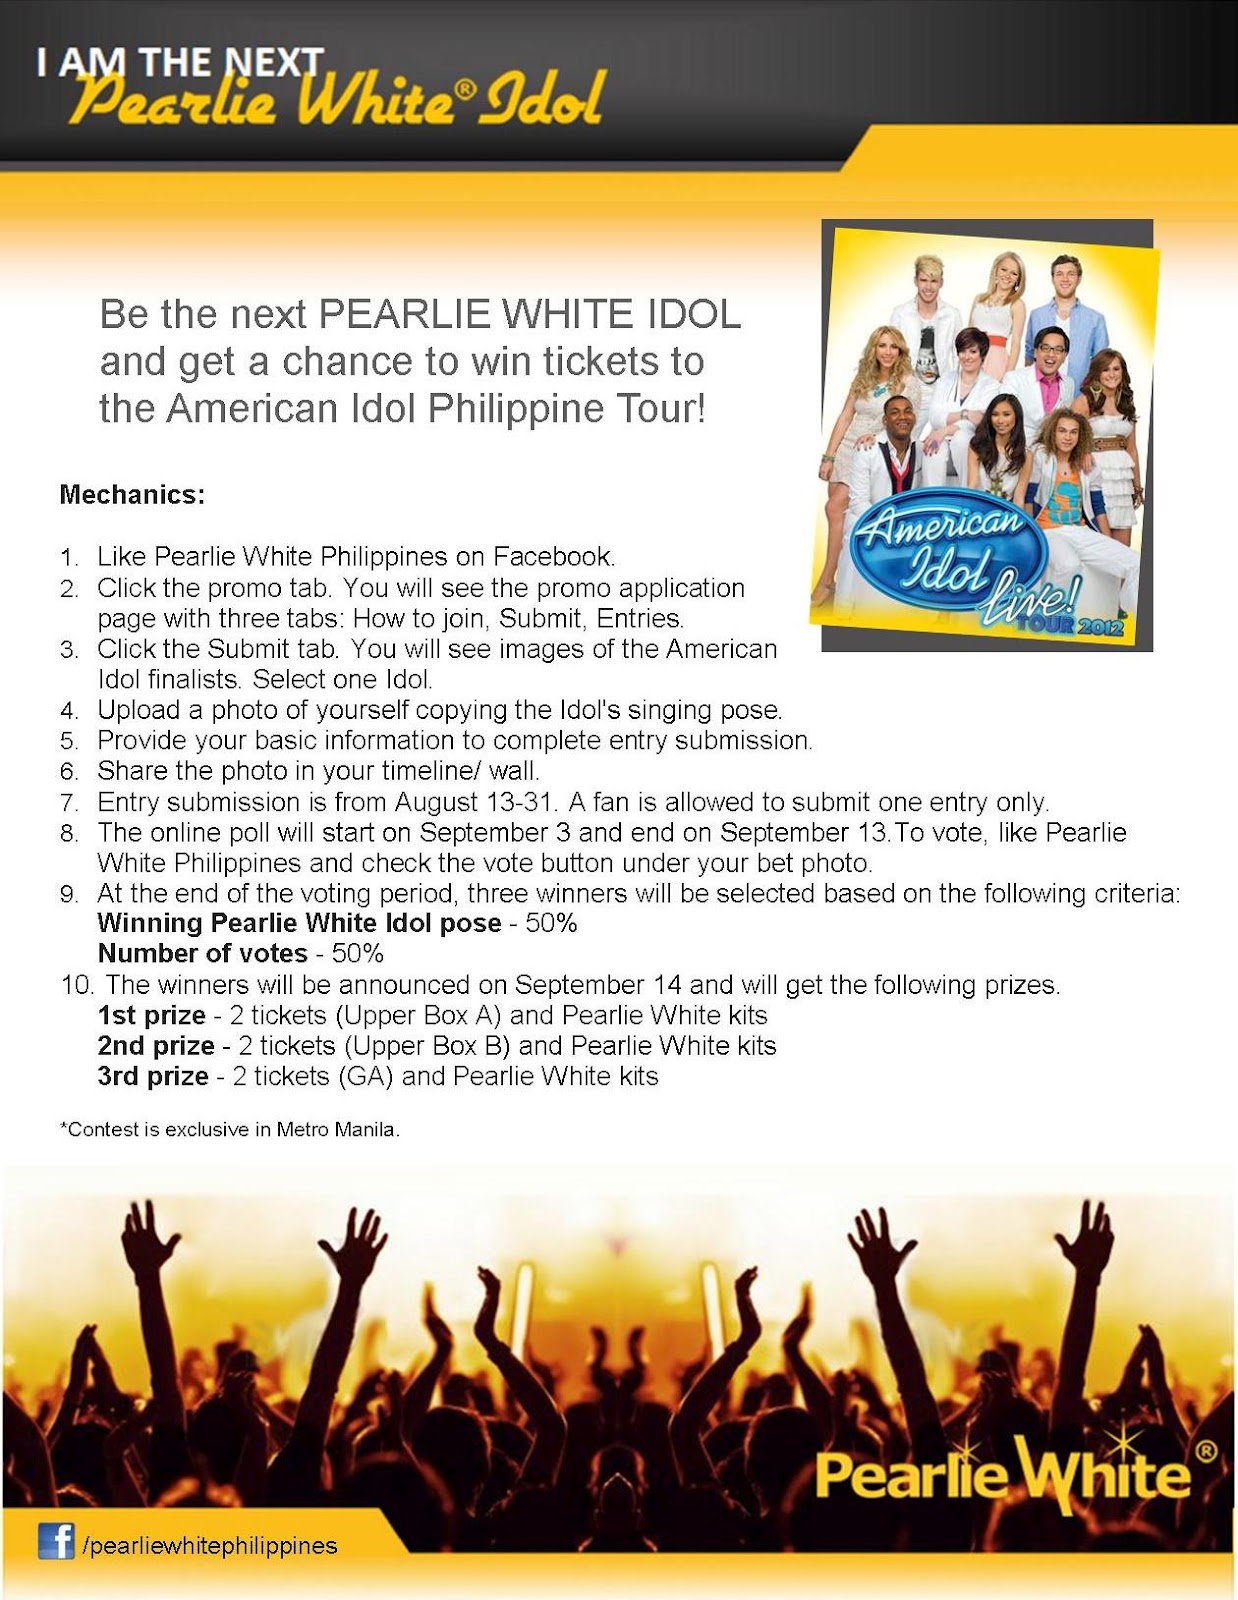 Manila Life Be the next Pearlie White Idol